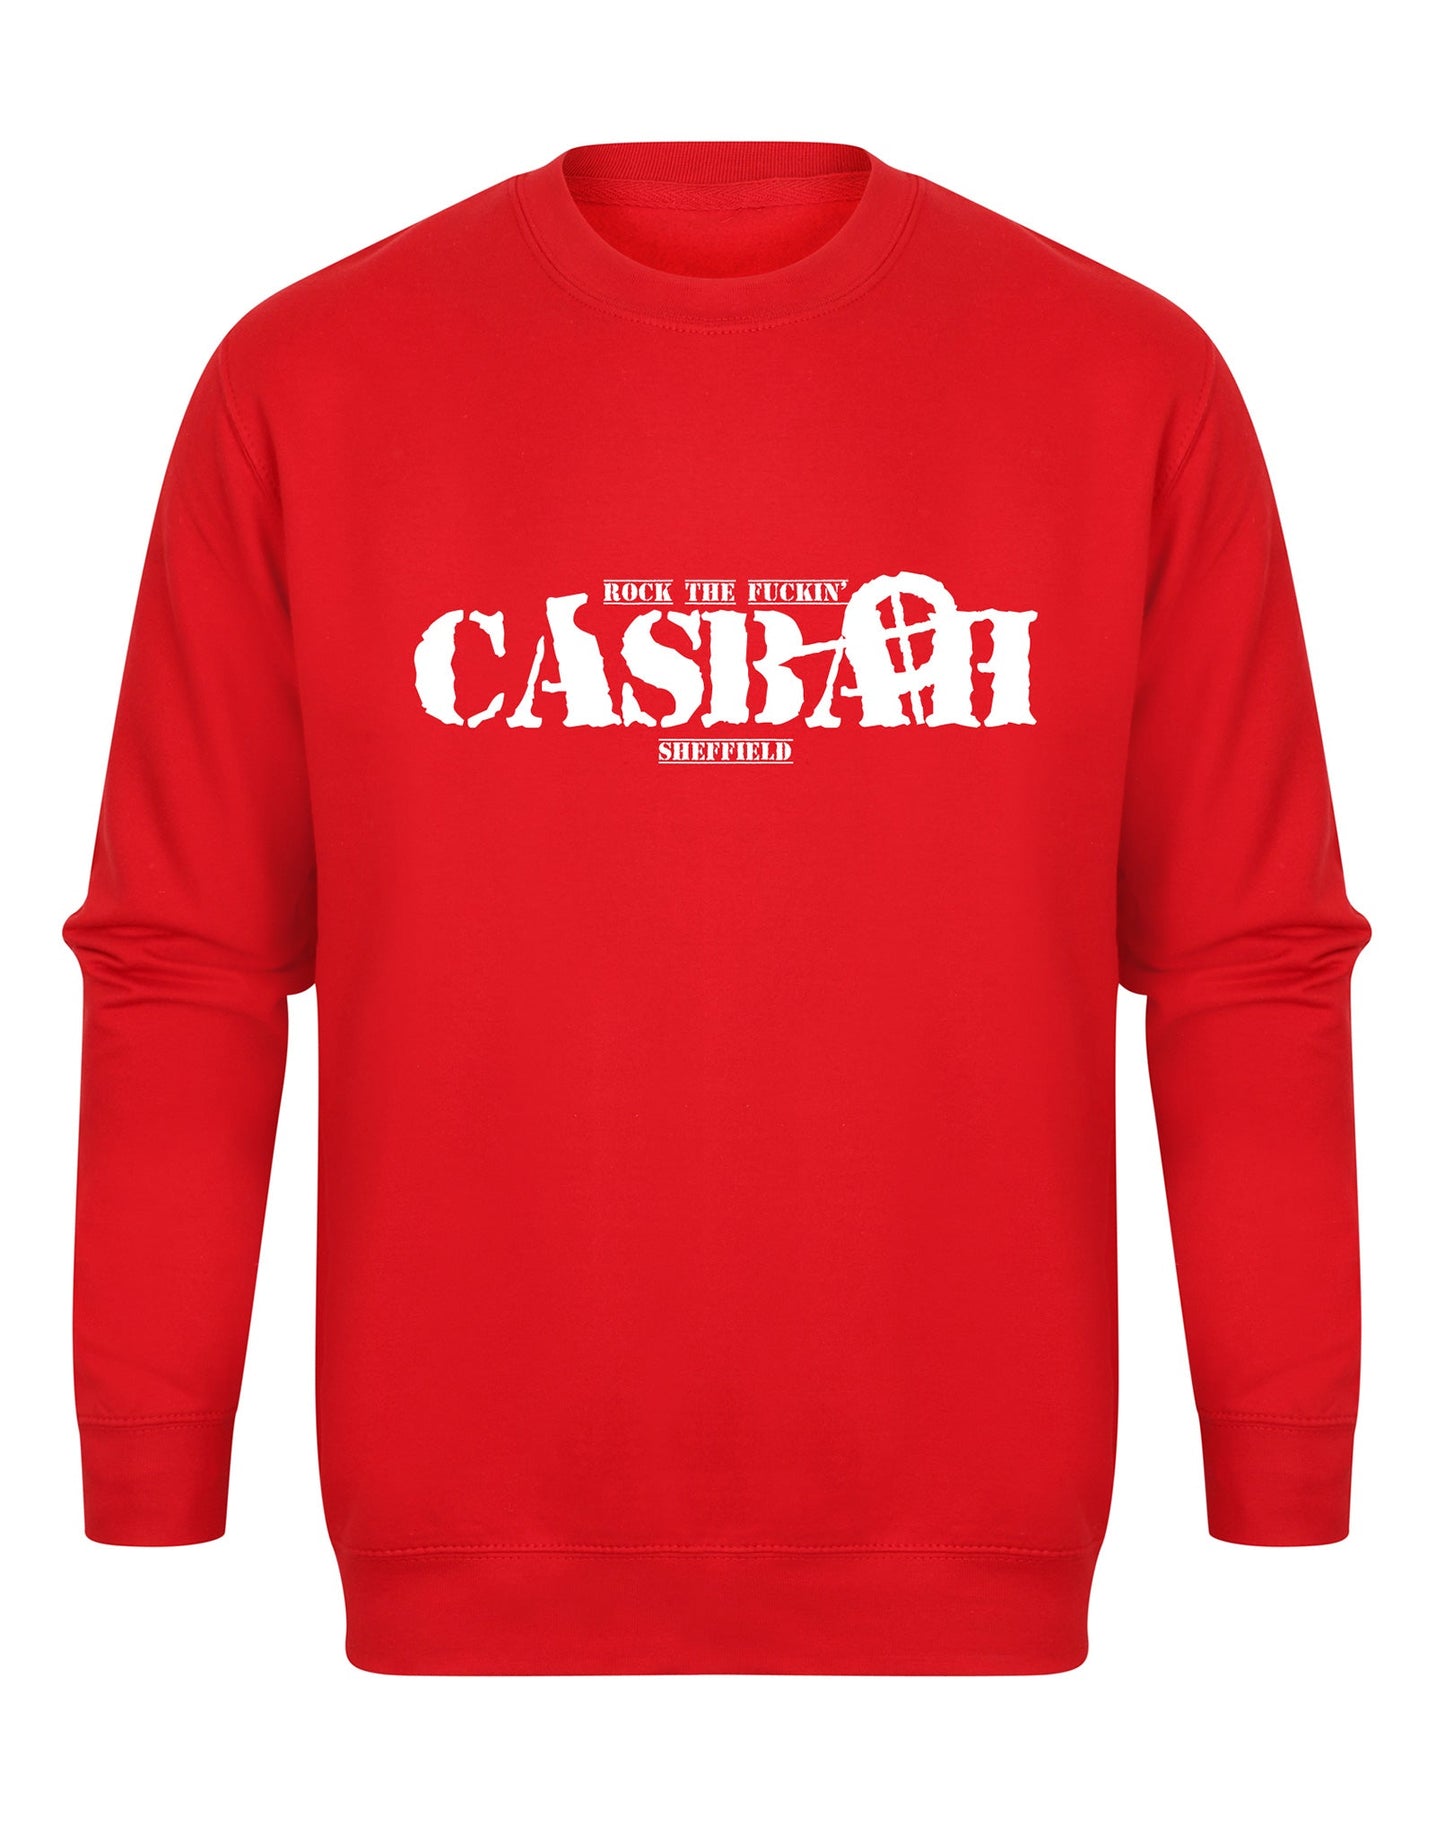 Casbah unisex fit sweatshirt - various colours - Dirty Stop Outs